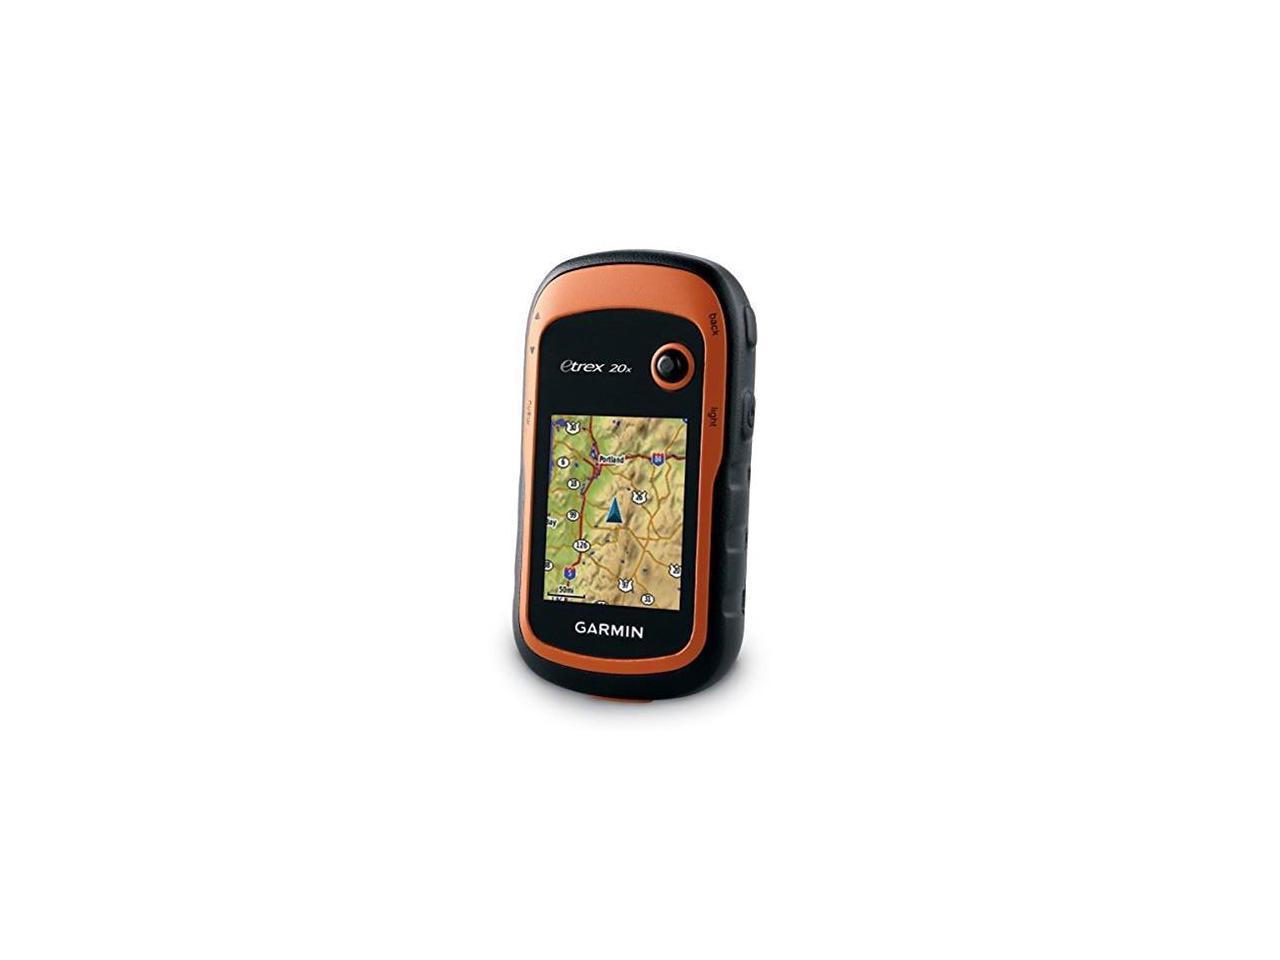 Garmin eTrex 20x Handheld GPS